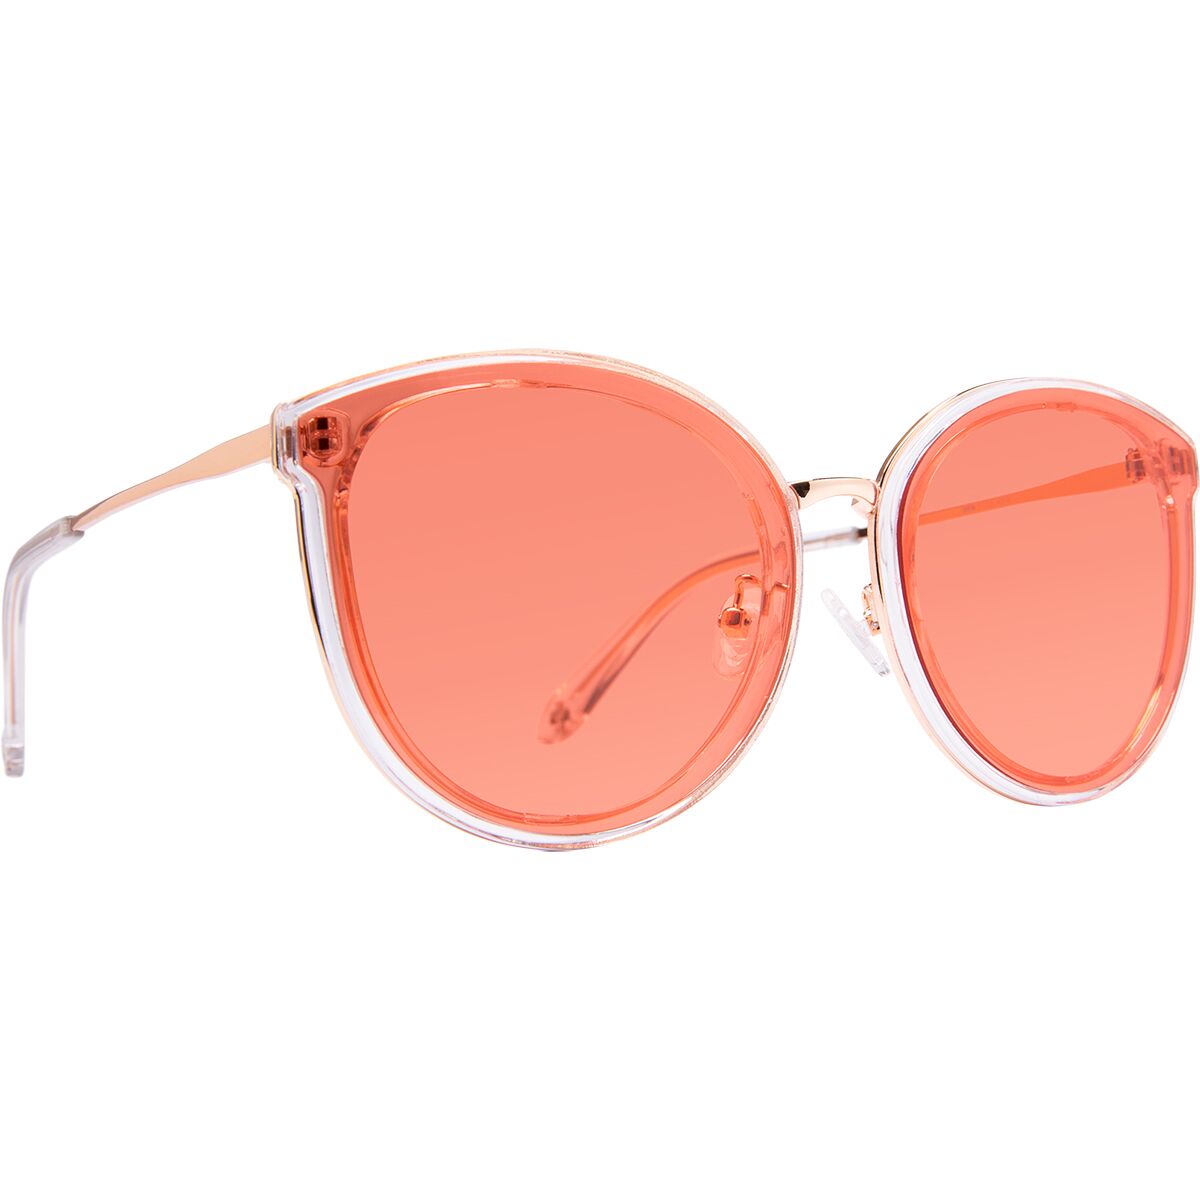 Spy Colada Sunglasses - Women's